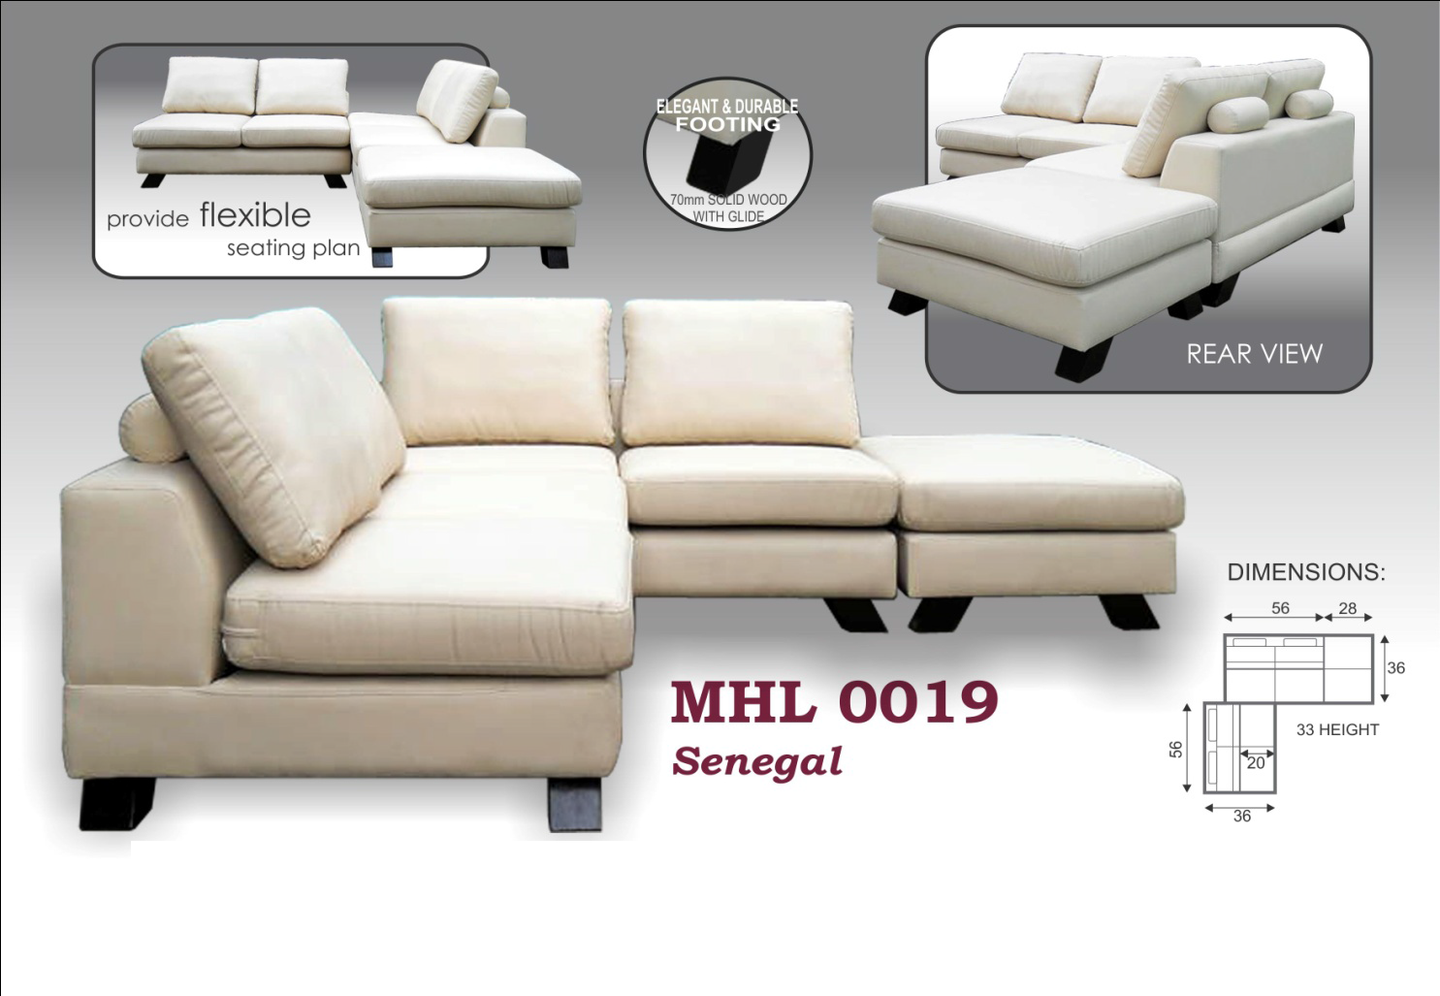 MHL 0019 Senegal